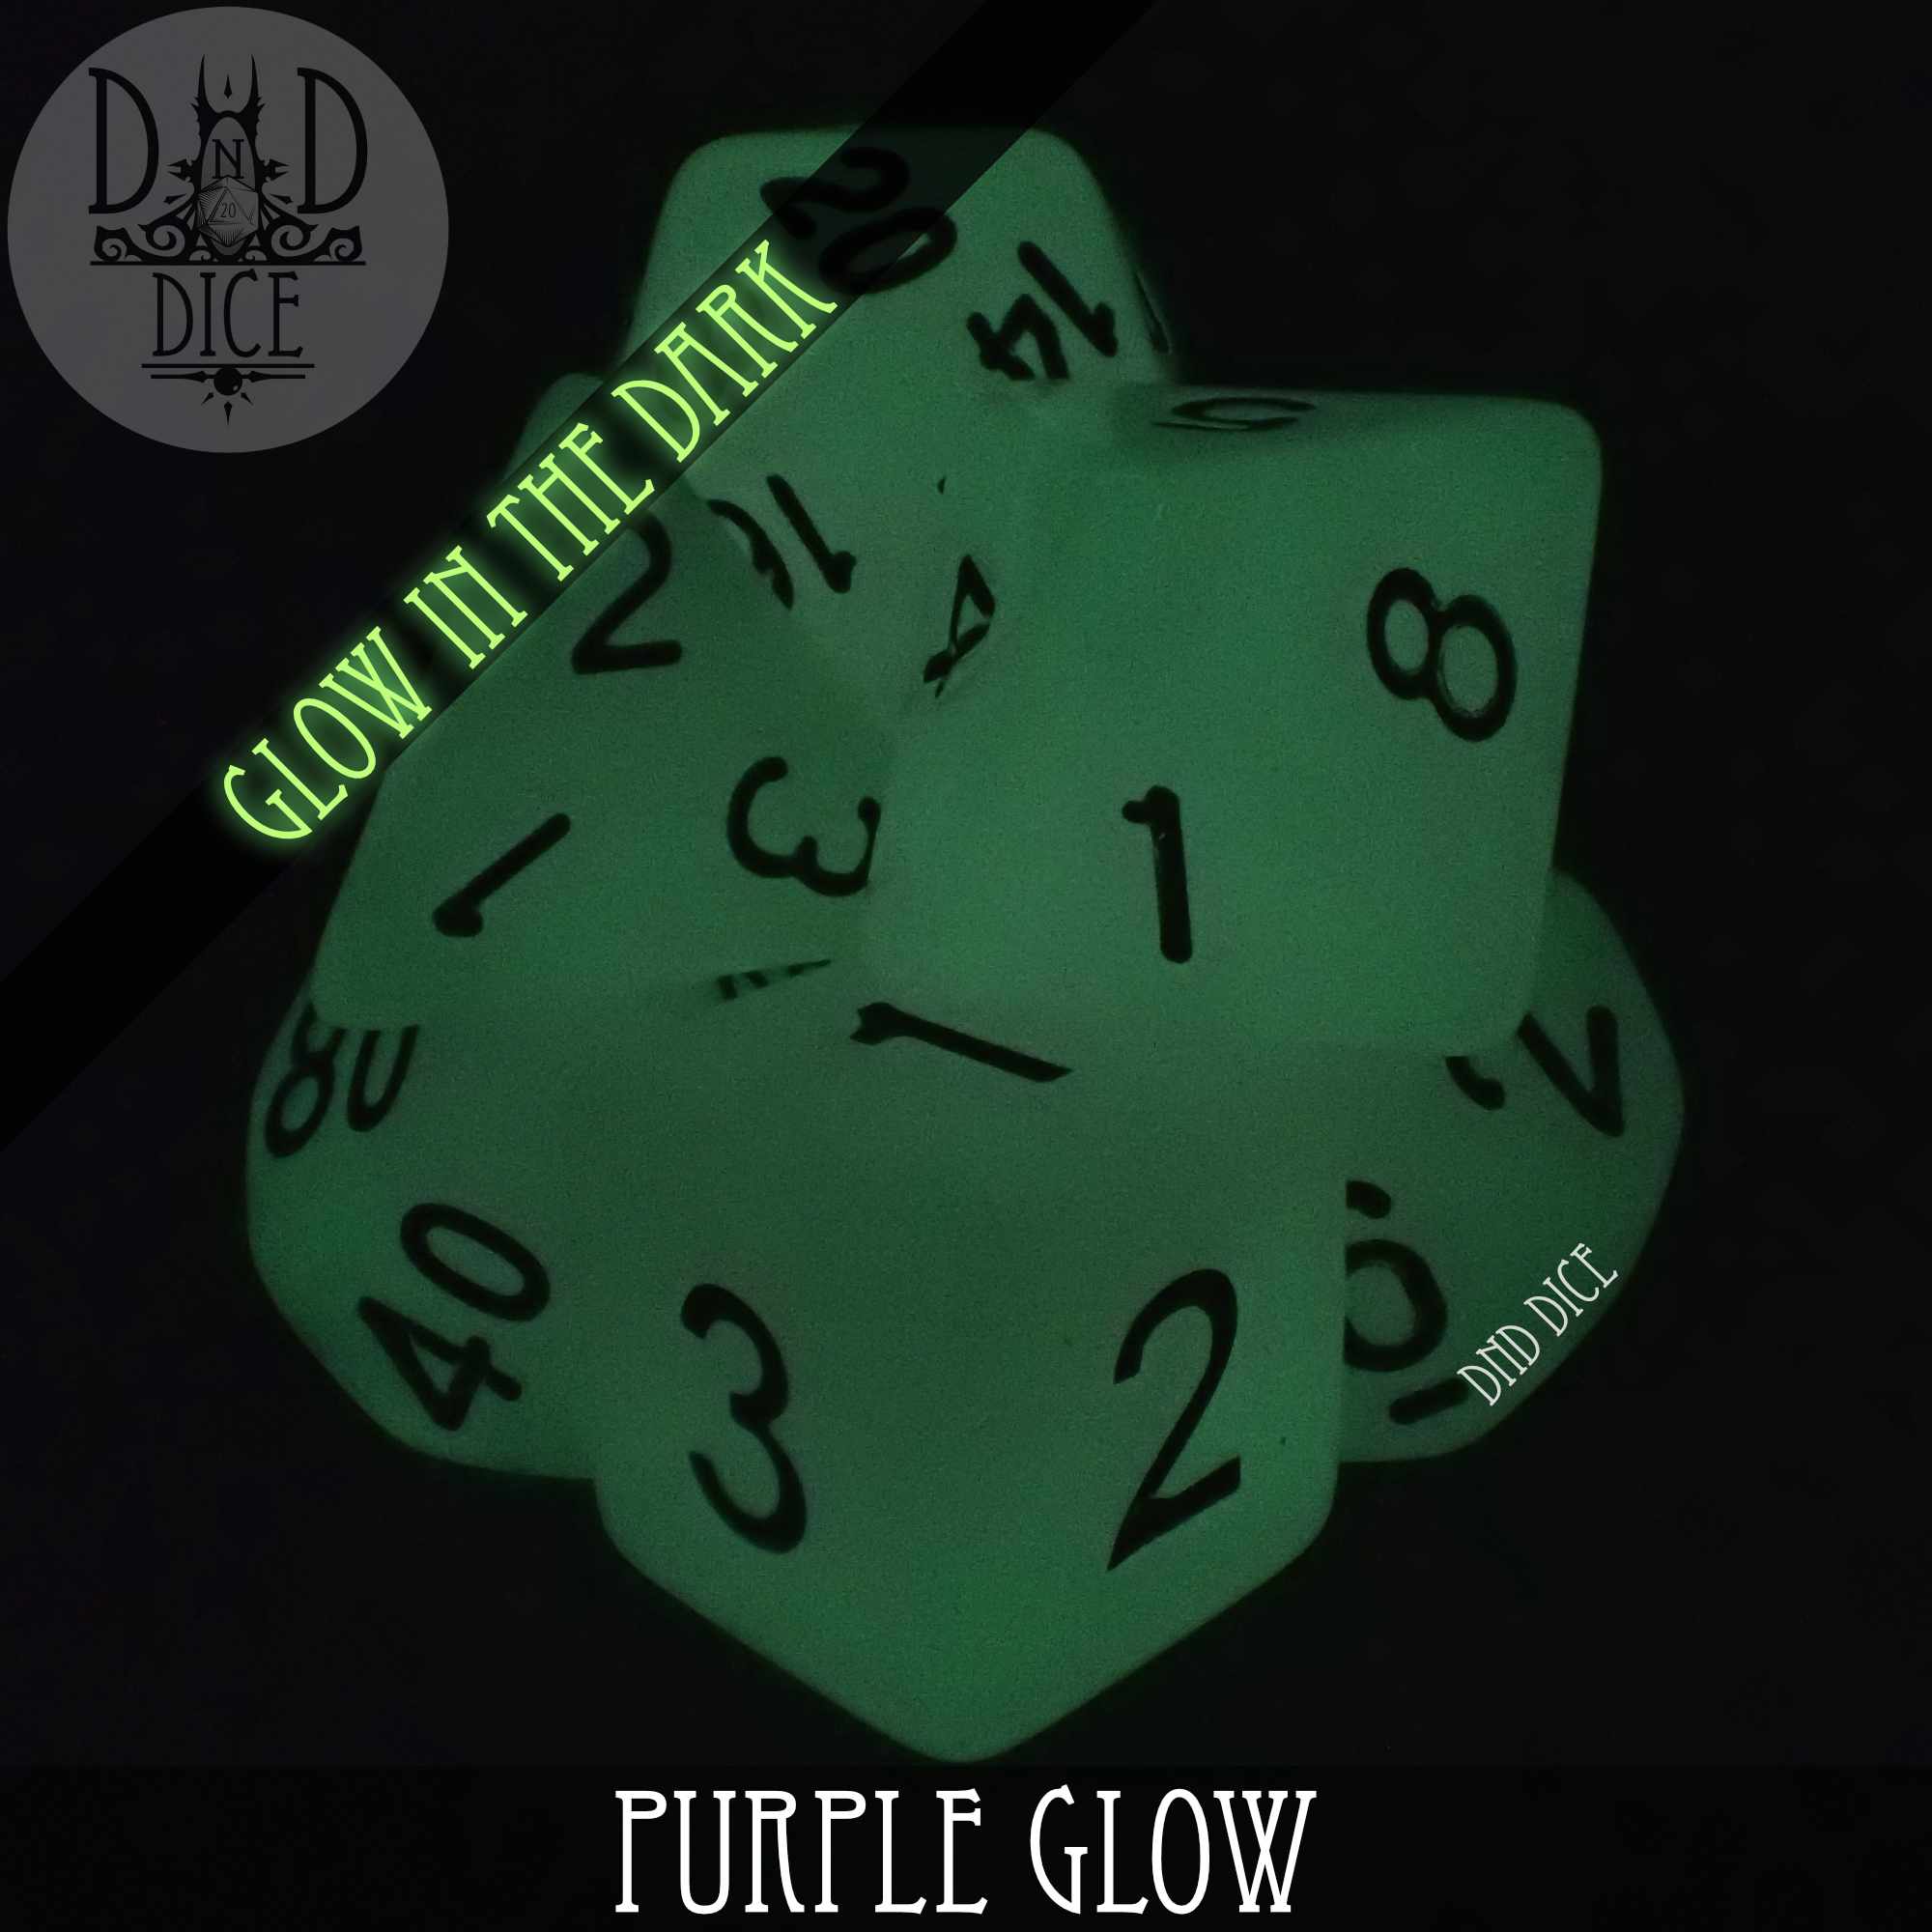 Purple Glow in the Dark Dice Set